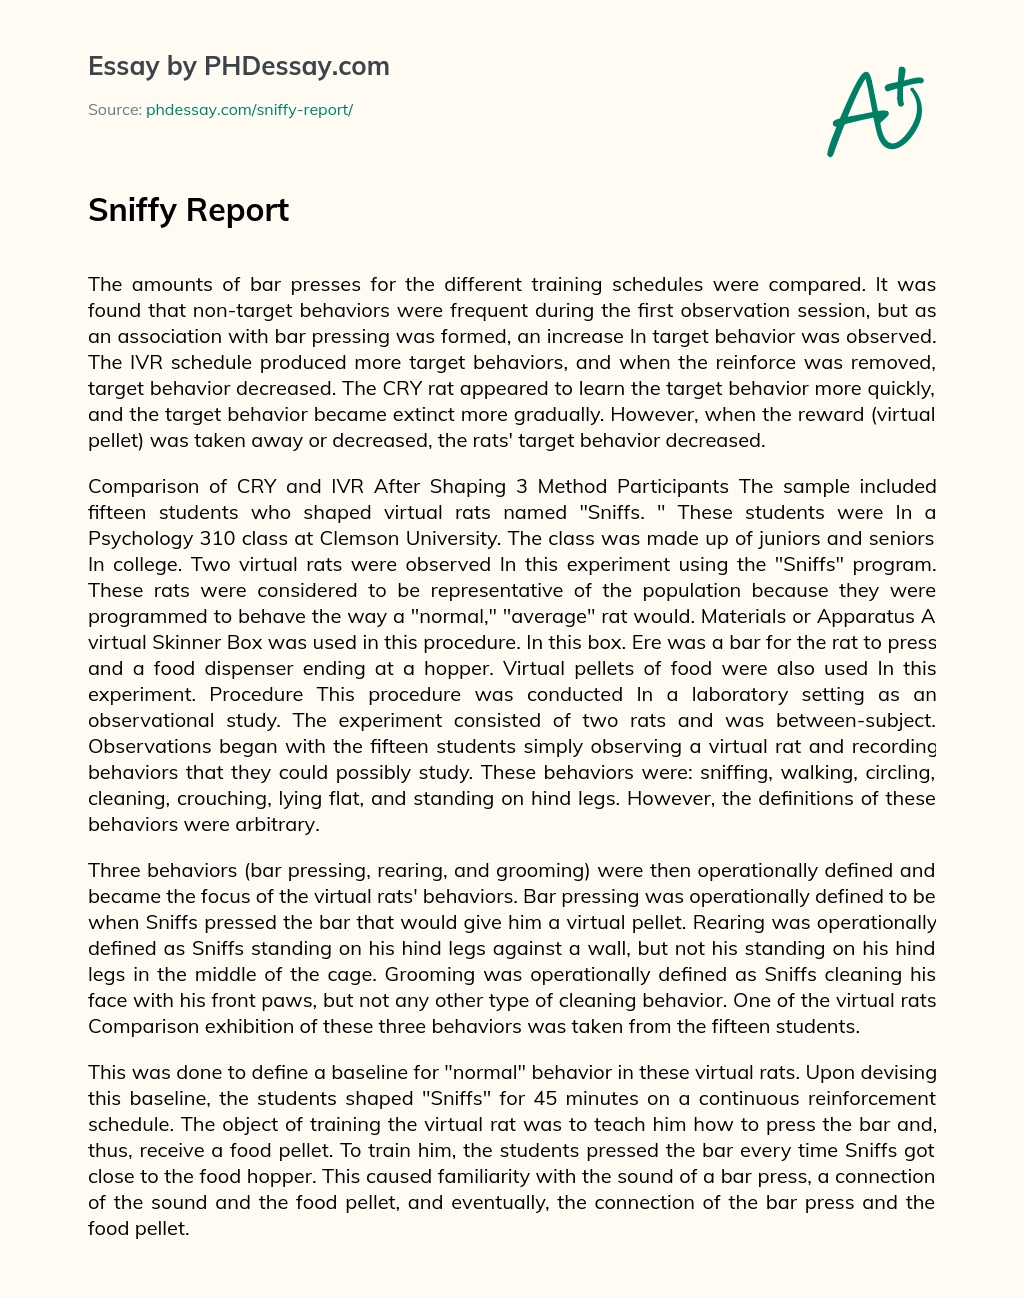 Sniffy Report essay